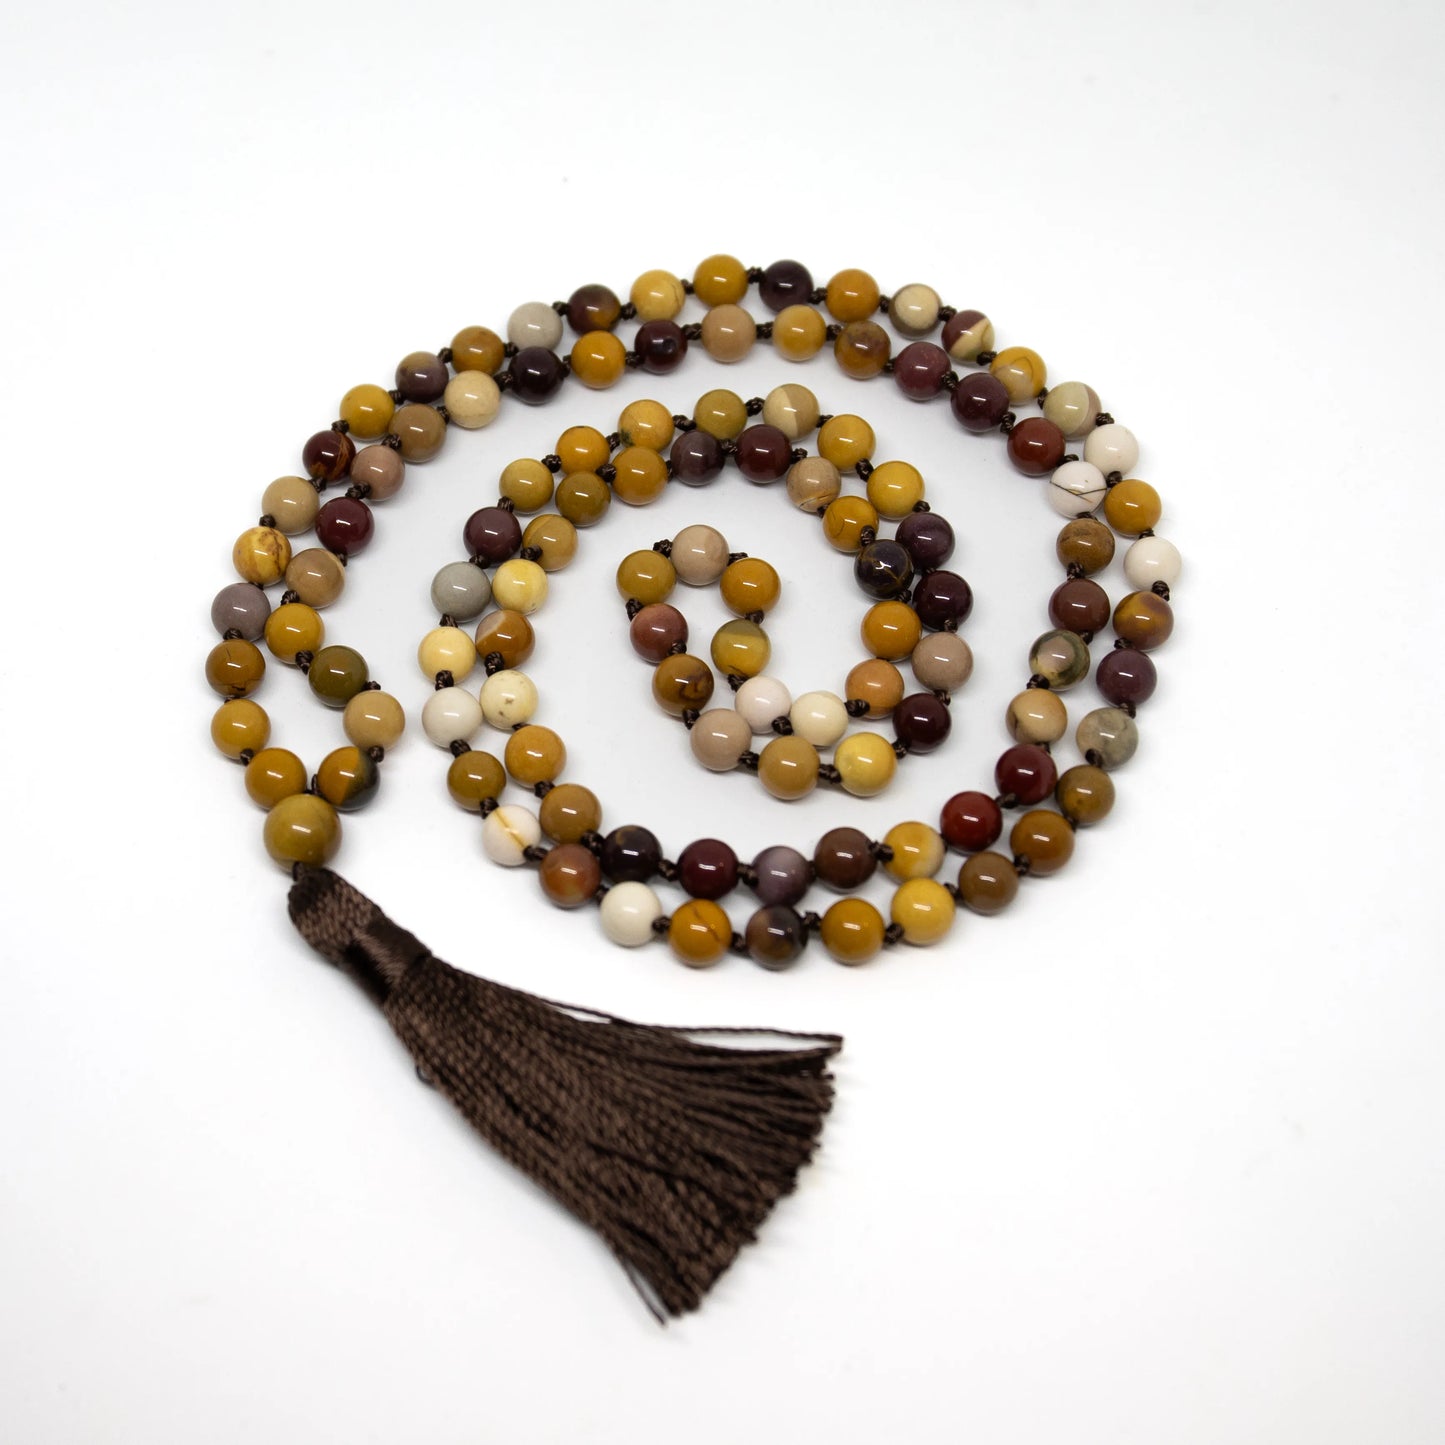 Mookaite Knotted 108 Bead Mala - Prayer Beads - 8mm (1 Pack)